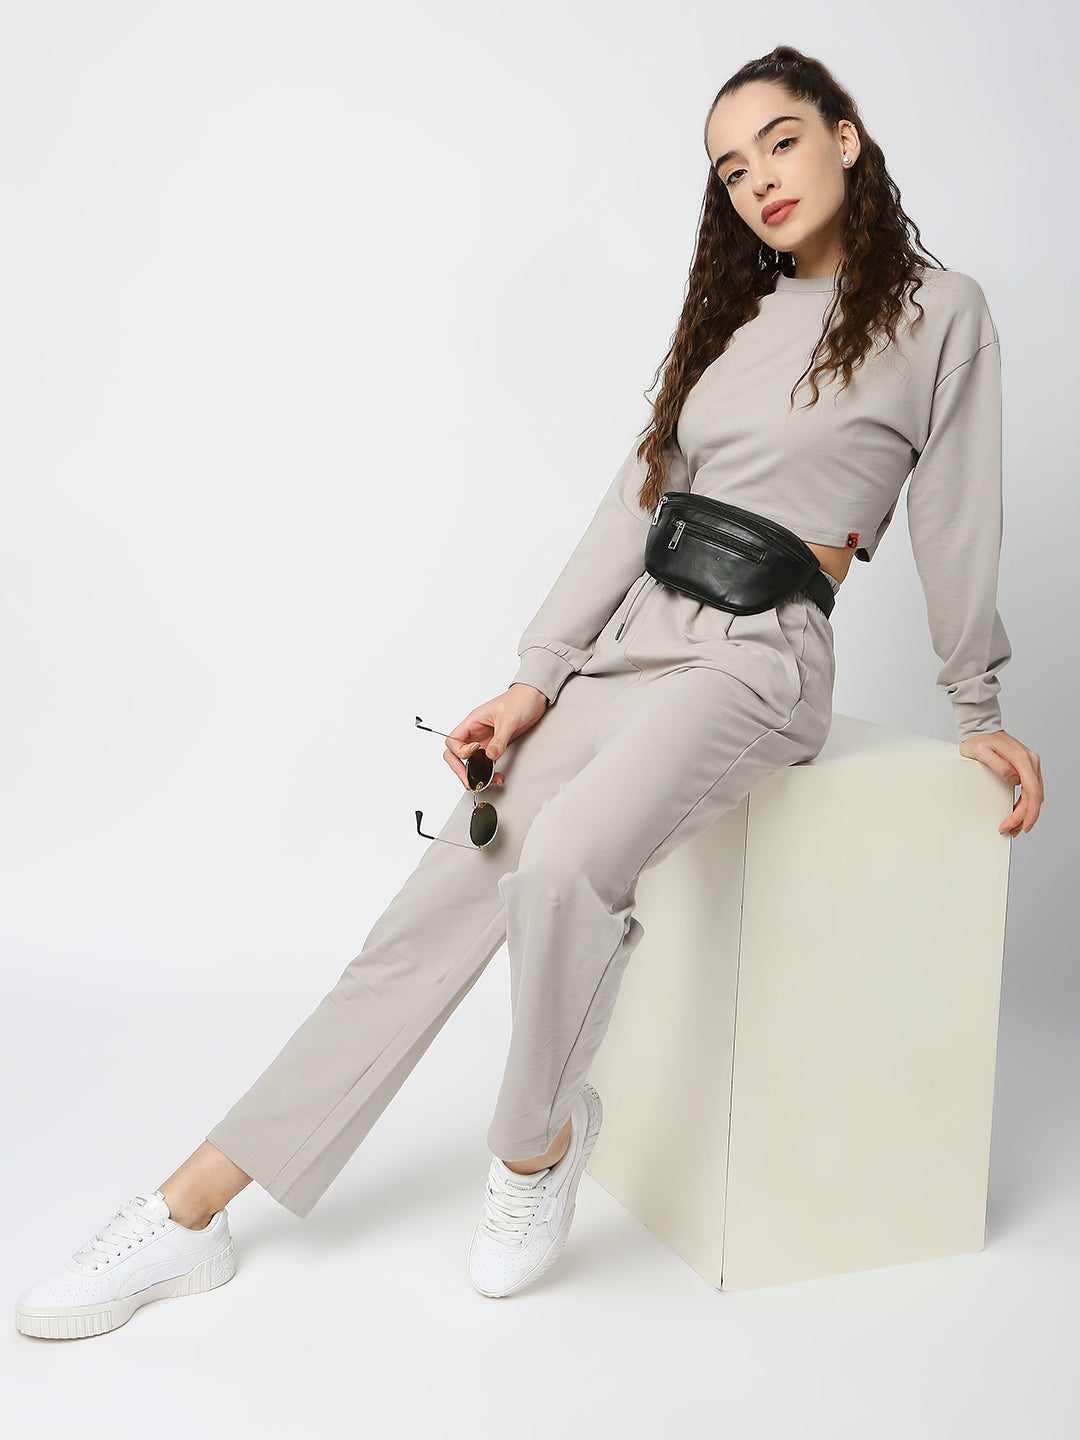 Buy Blamblack Women's Grey Color Full Sleeves Co-ordinates Set